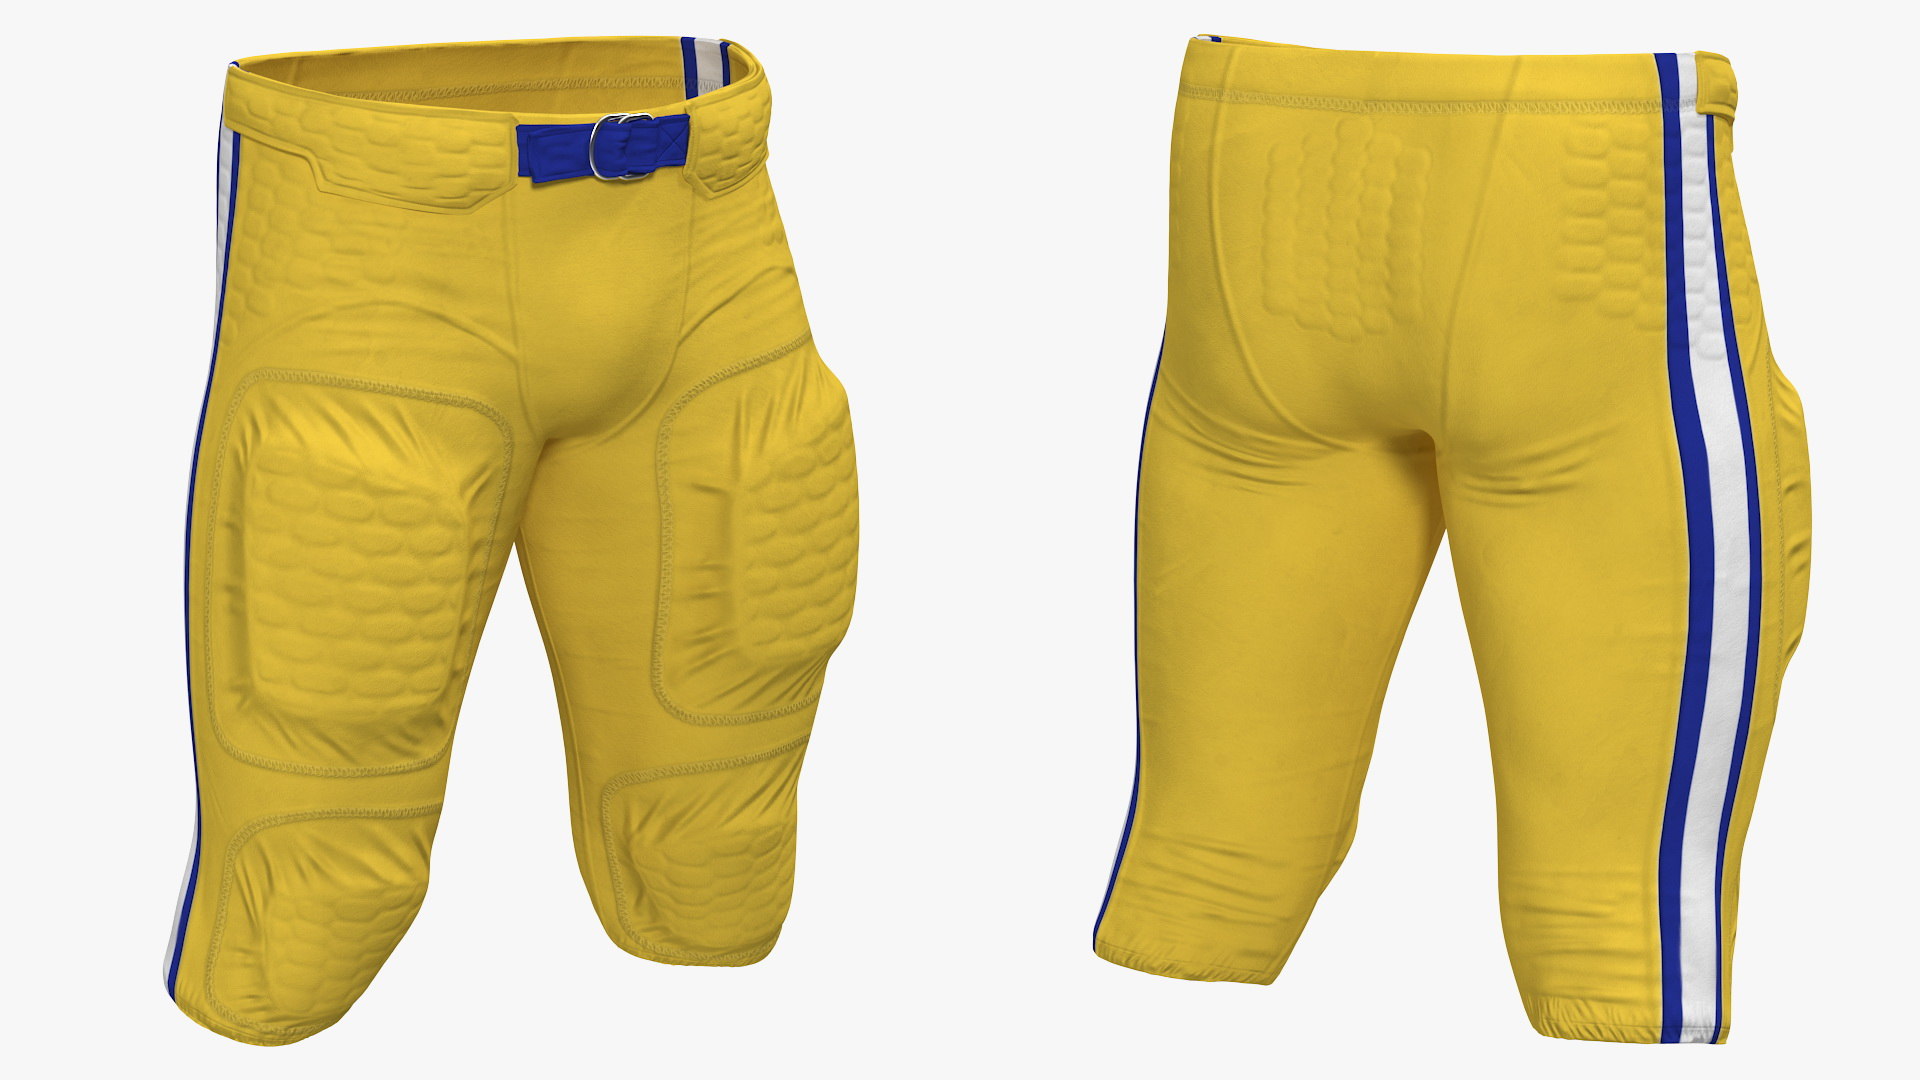 American football player pants model - TurboSquid 1493291